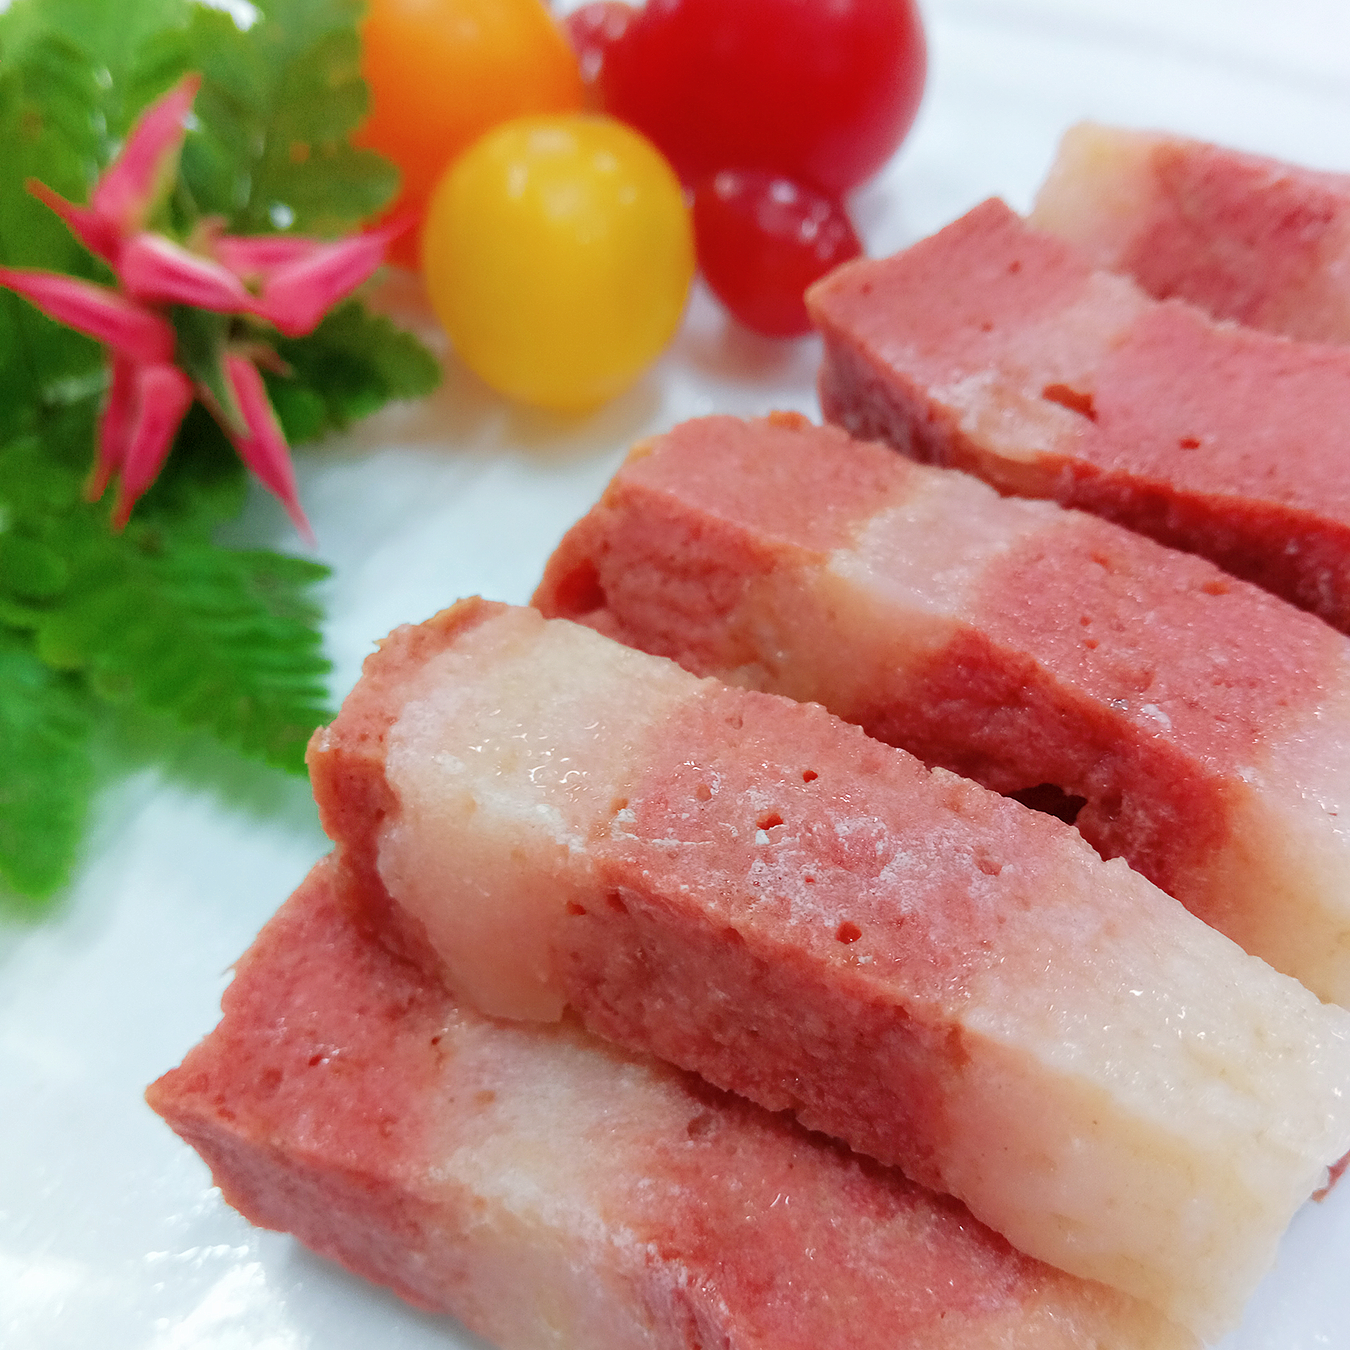 Image Vegetarian Cube Meat 善缘-三层肉 1000grams